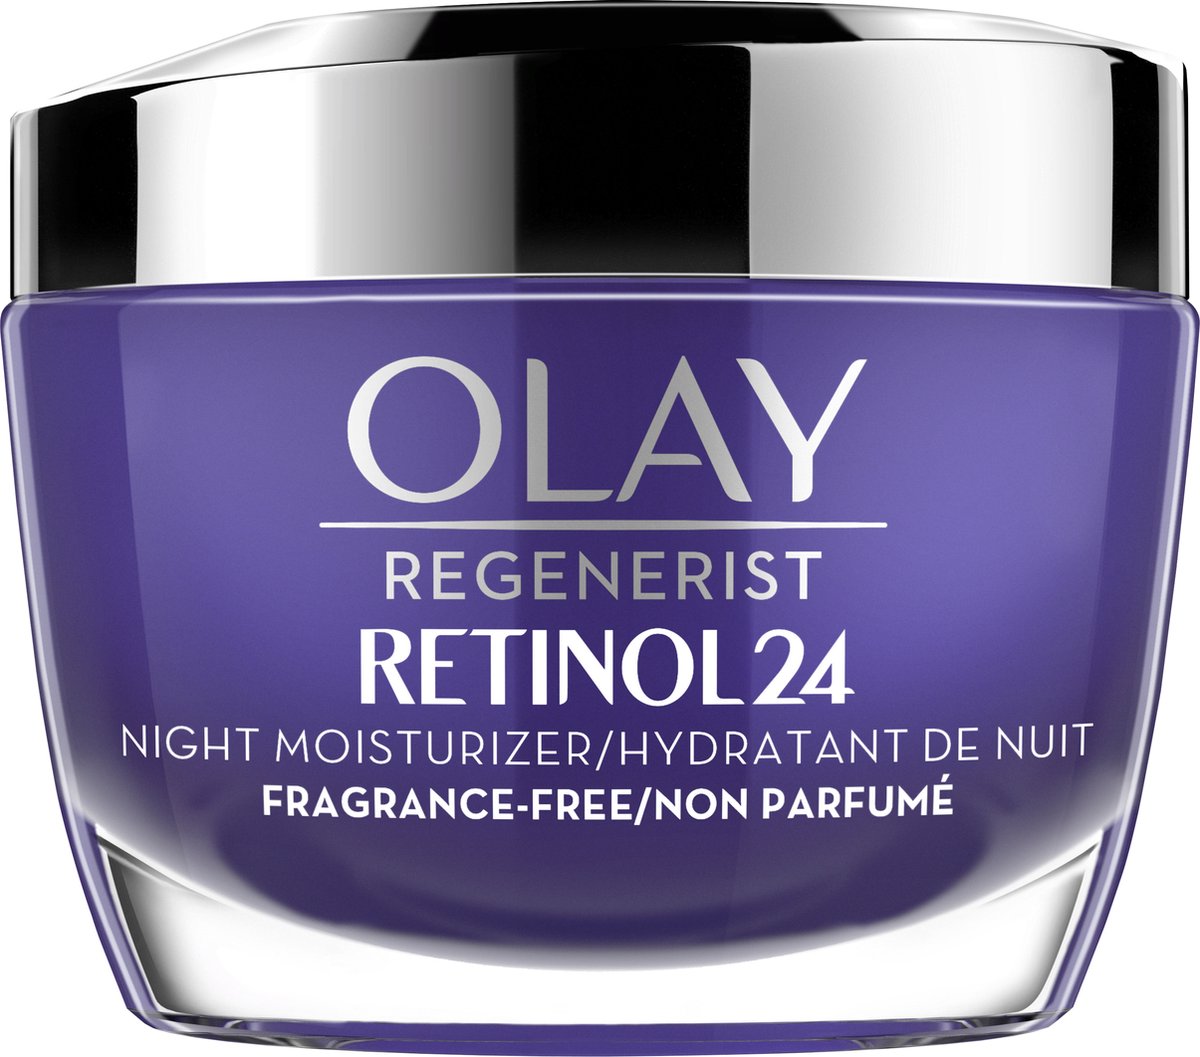 Hydraterende Crème Regenerist Retinol24 Olay (50 ml)